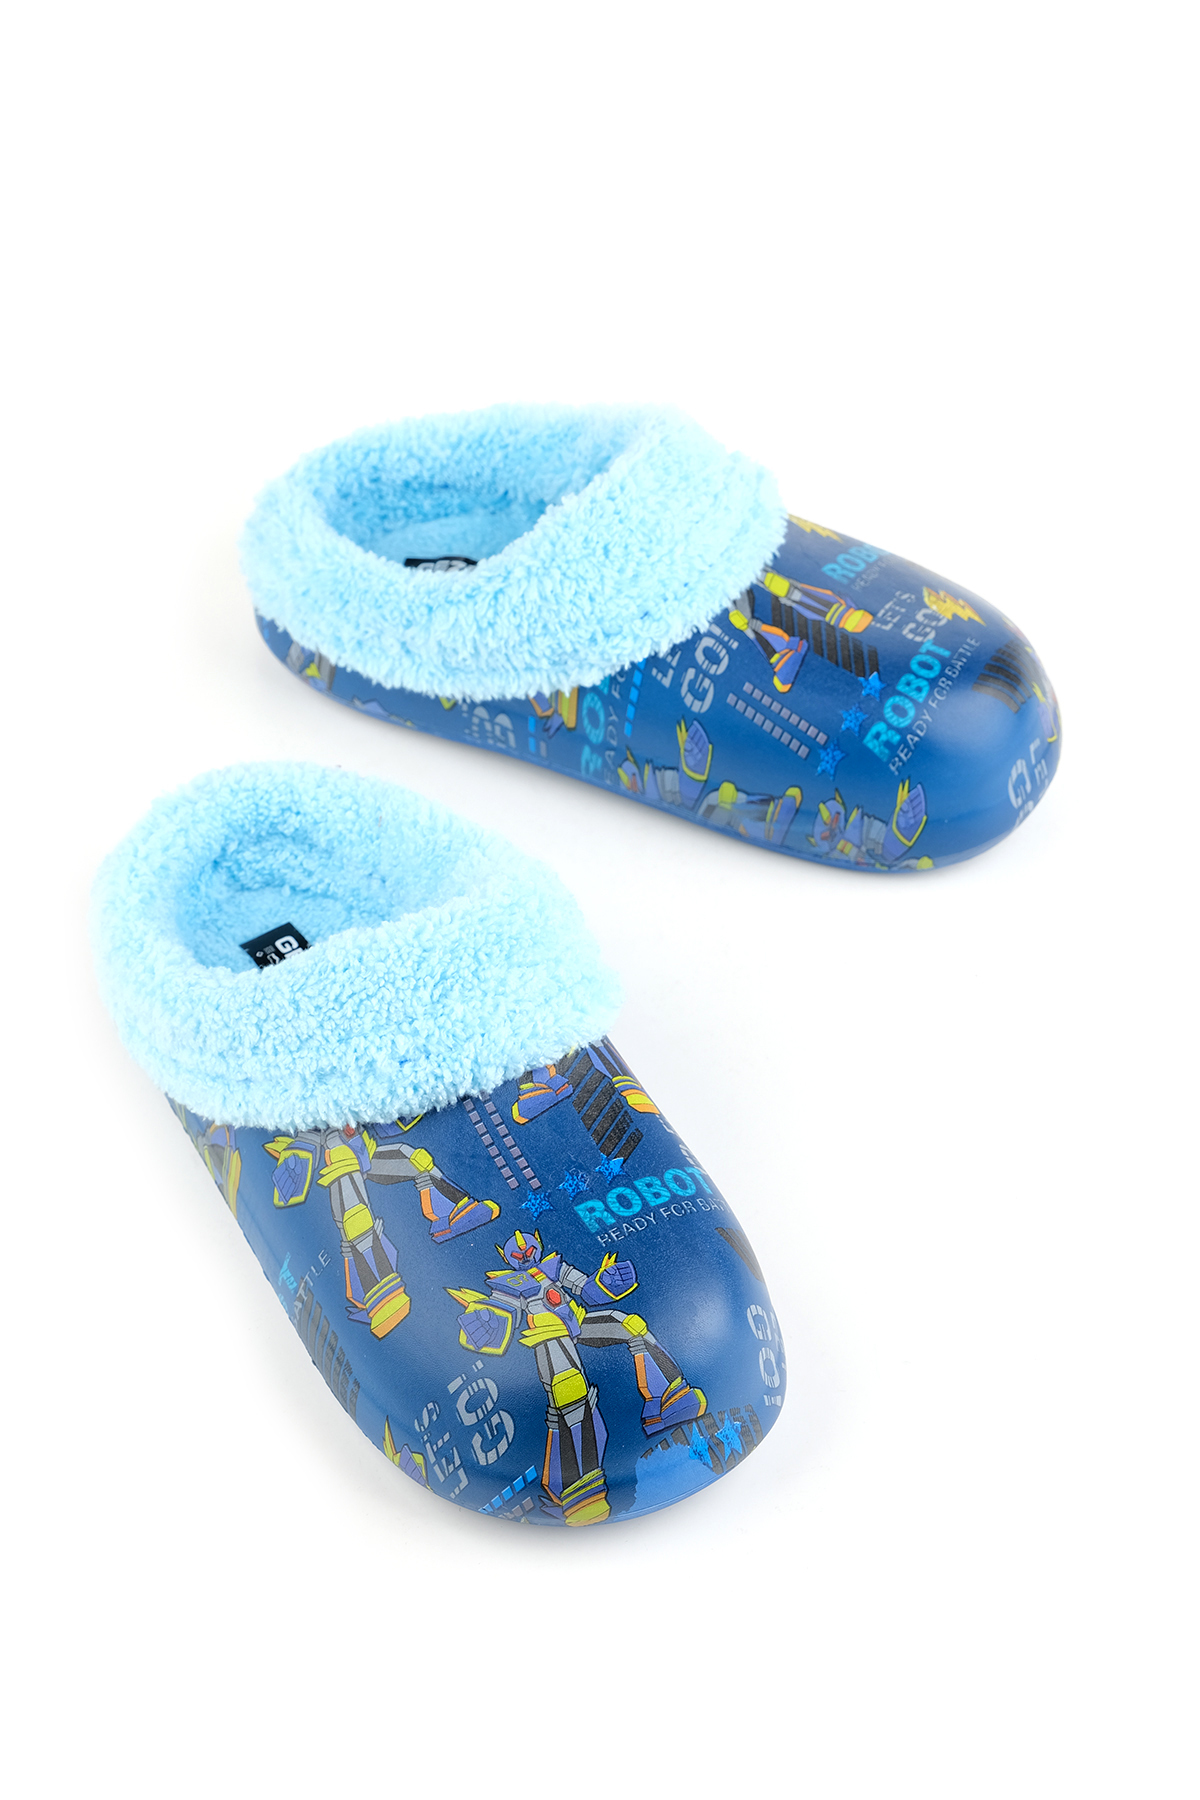 Sonic The Hedgehog Boys Slippers Blue, 5 UK Child: Amazon.co.uk: Fashion-vietvuevent.vn